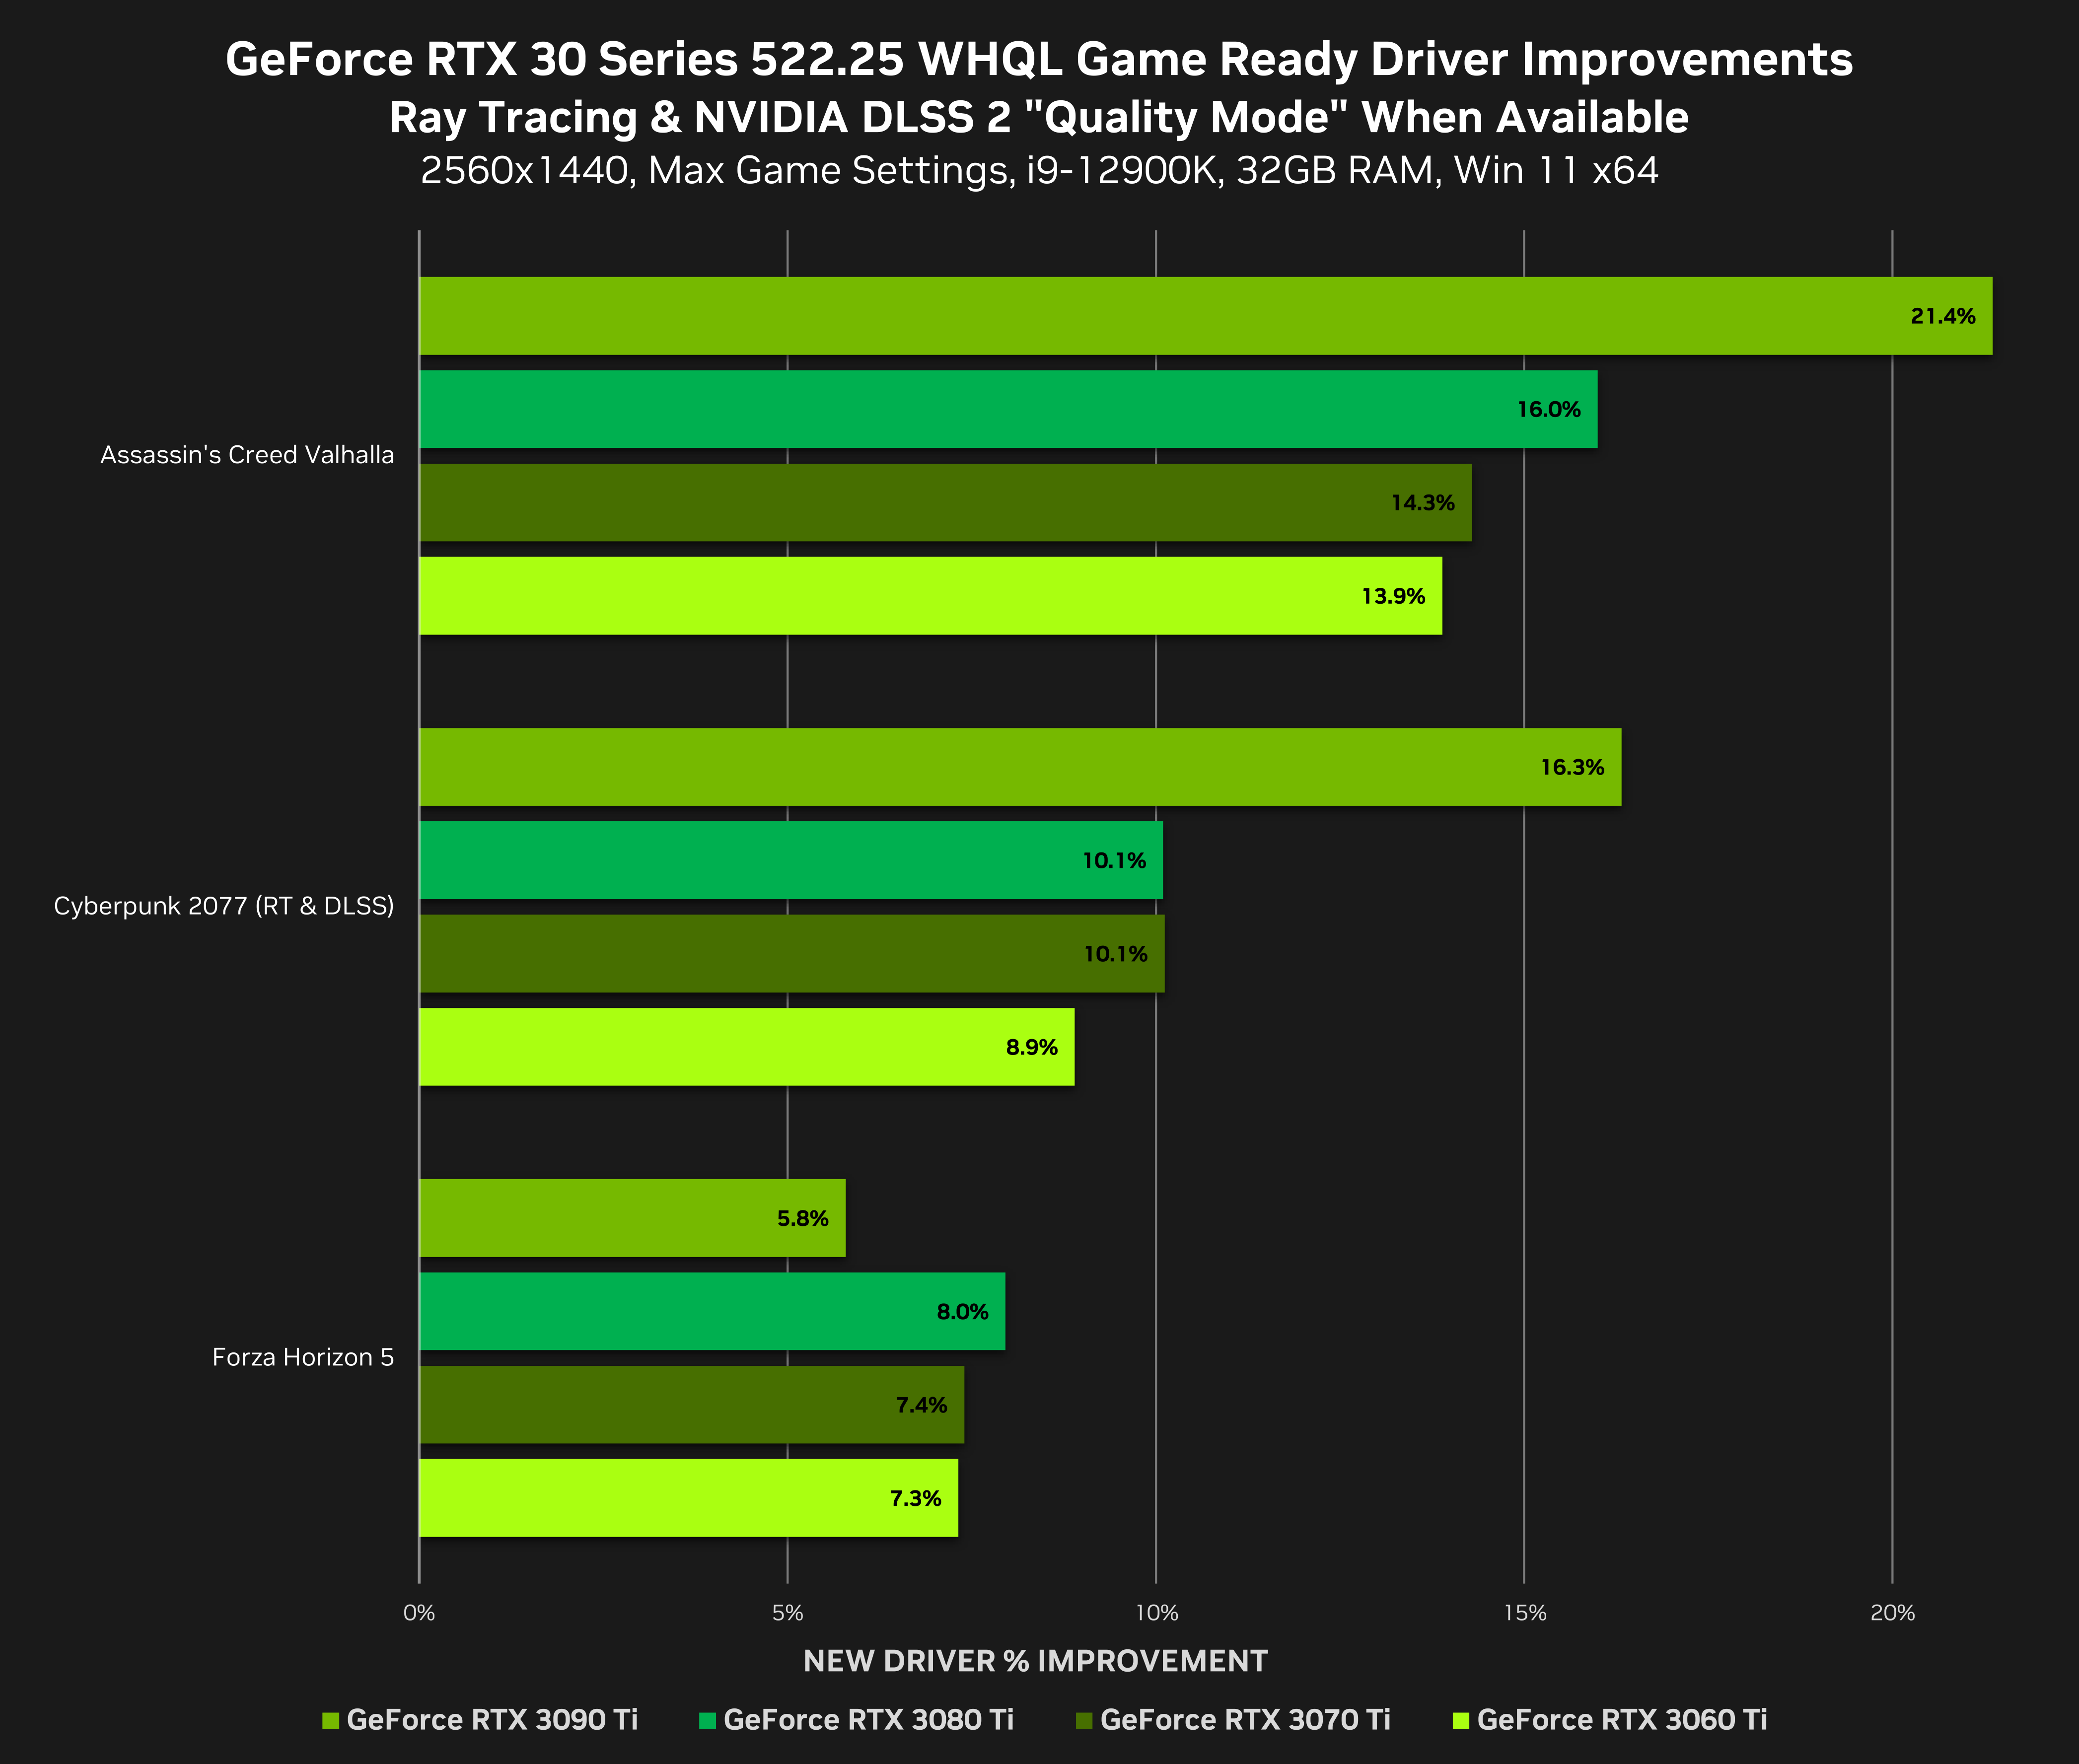 PNY GeForce RTX 4070 Ti Confirms RTX 4080 12 GB Specs Under The Hood